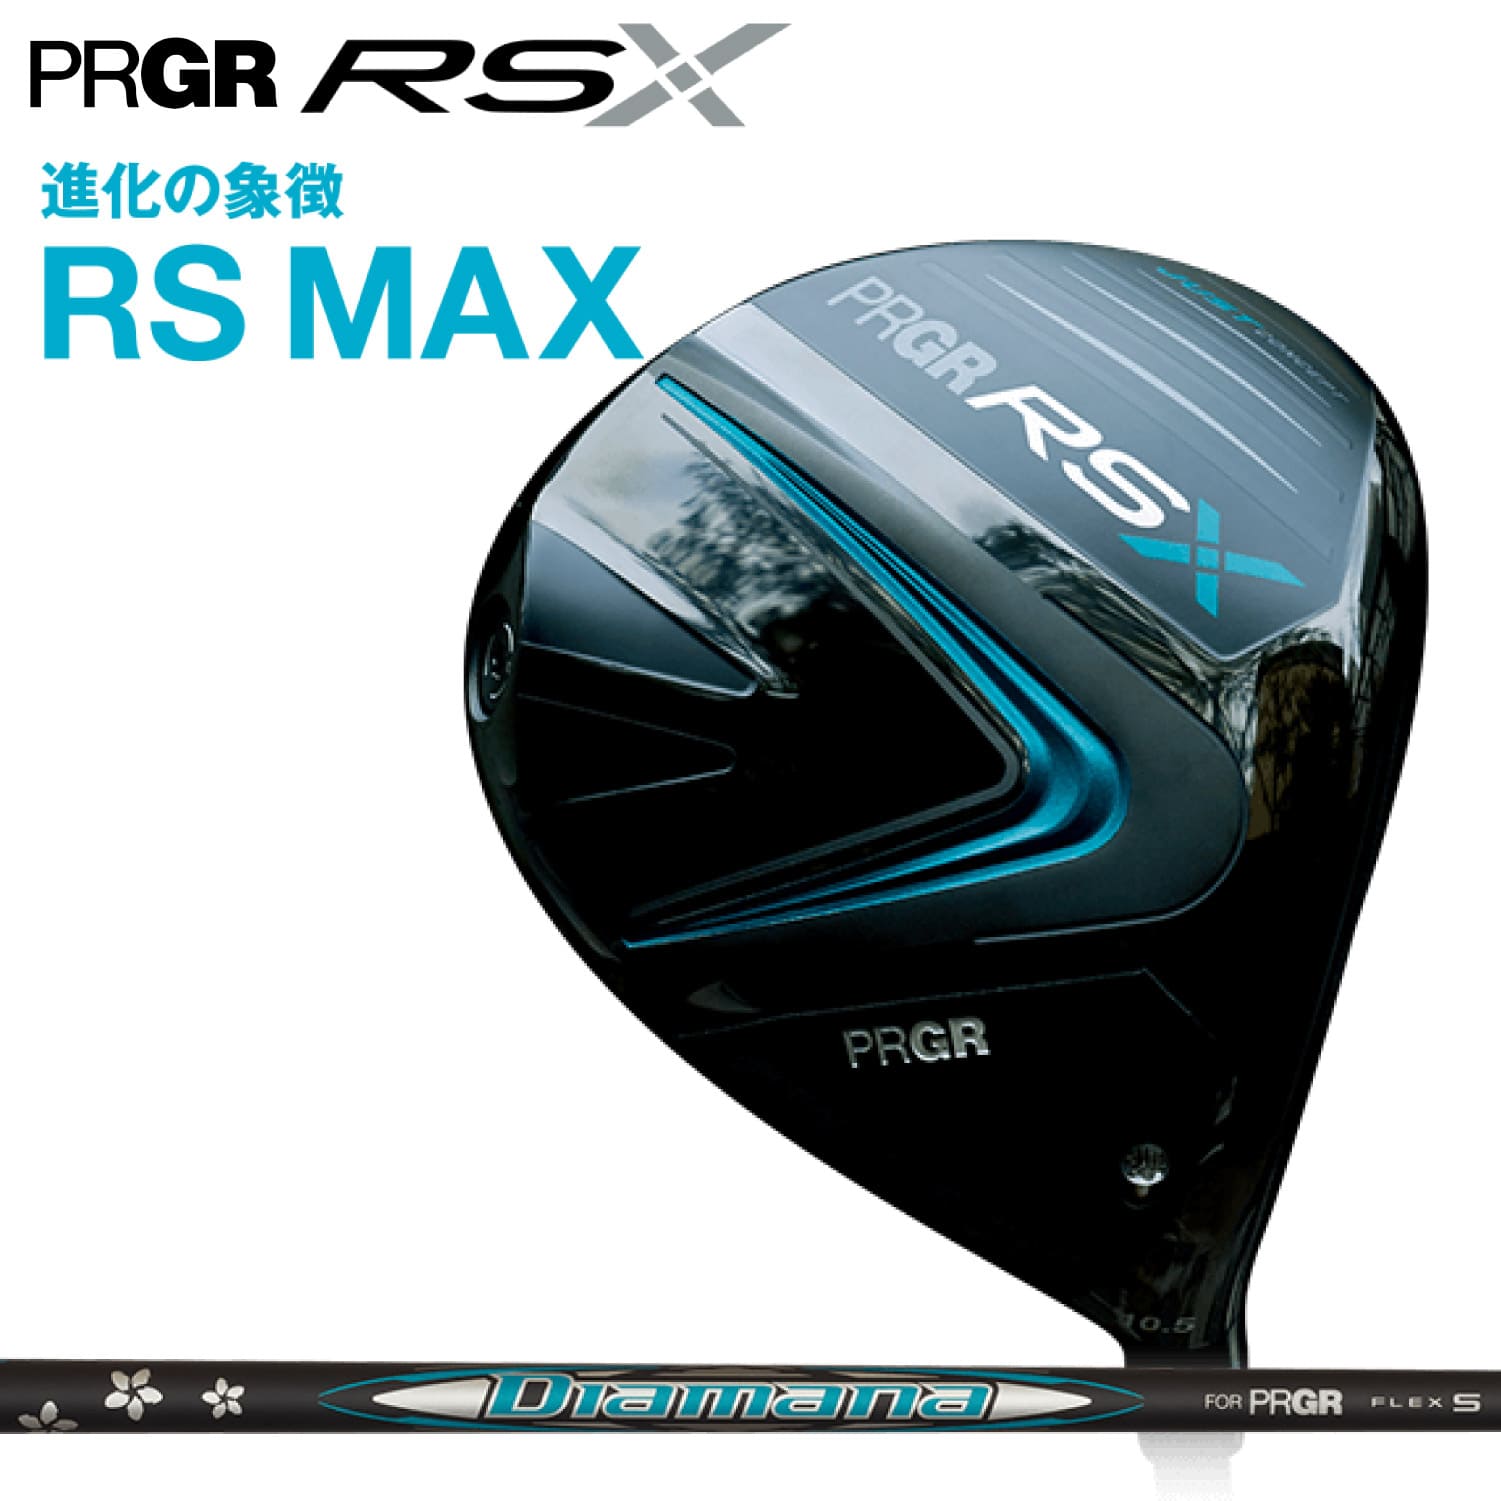 PRGR RS X DRIVER RS MAX Diamana FOR PRGR